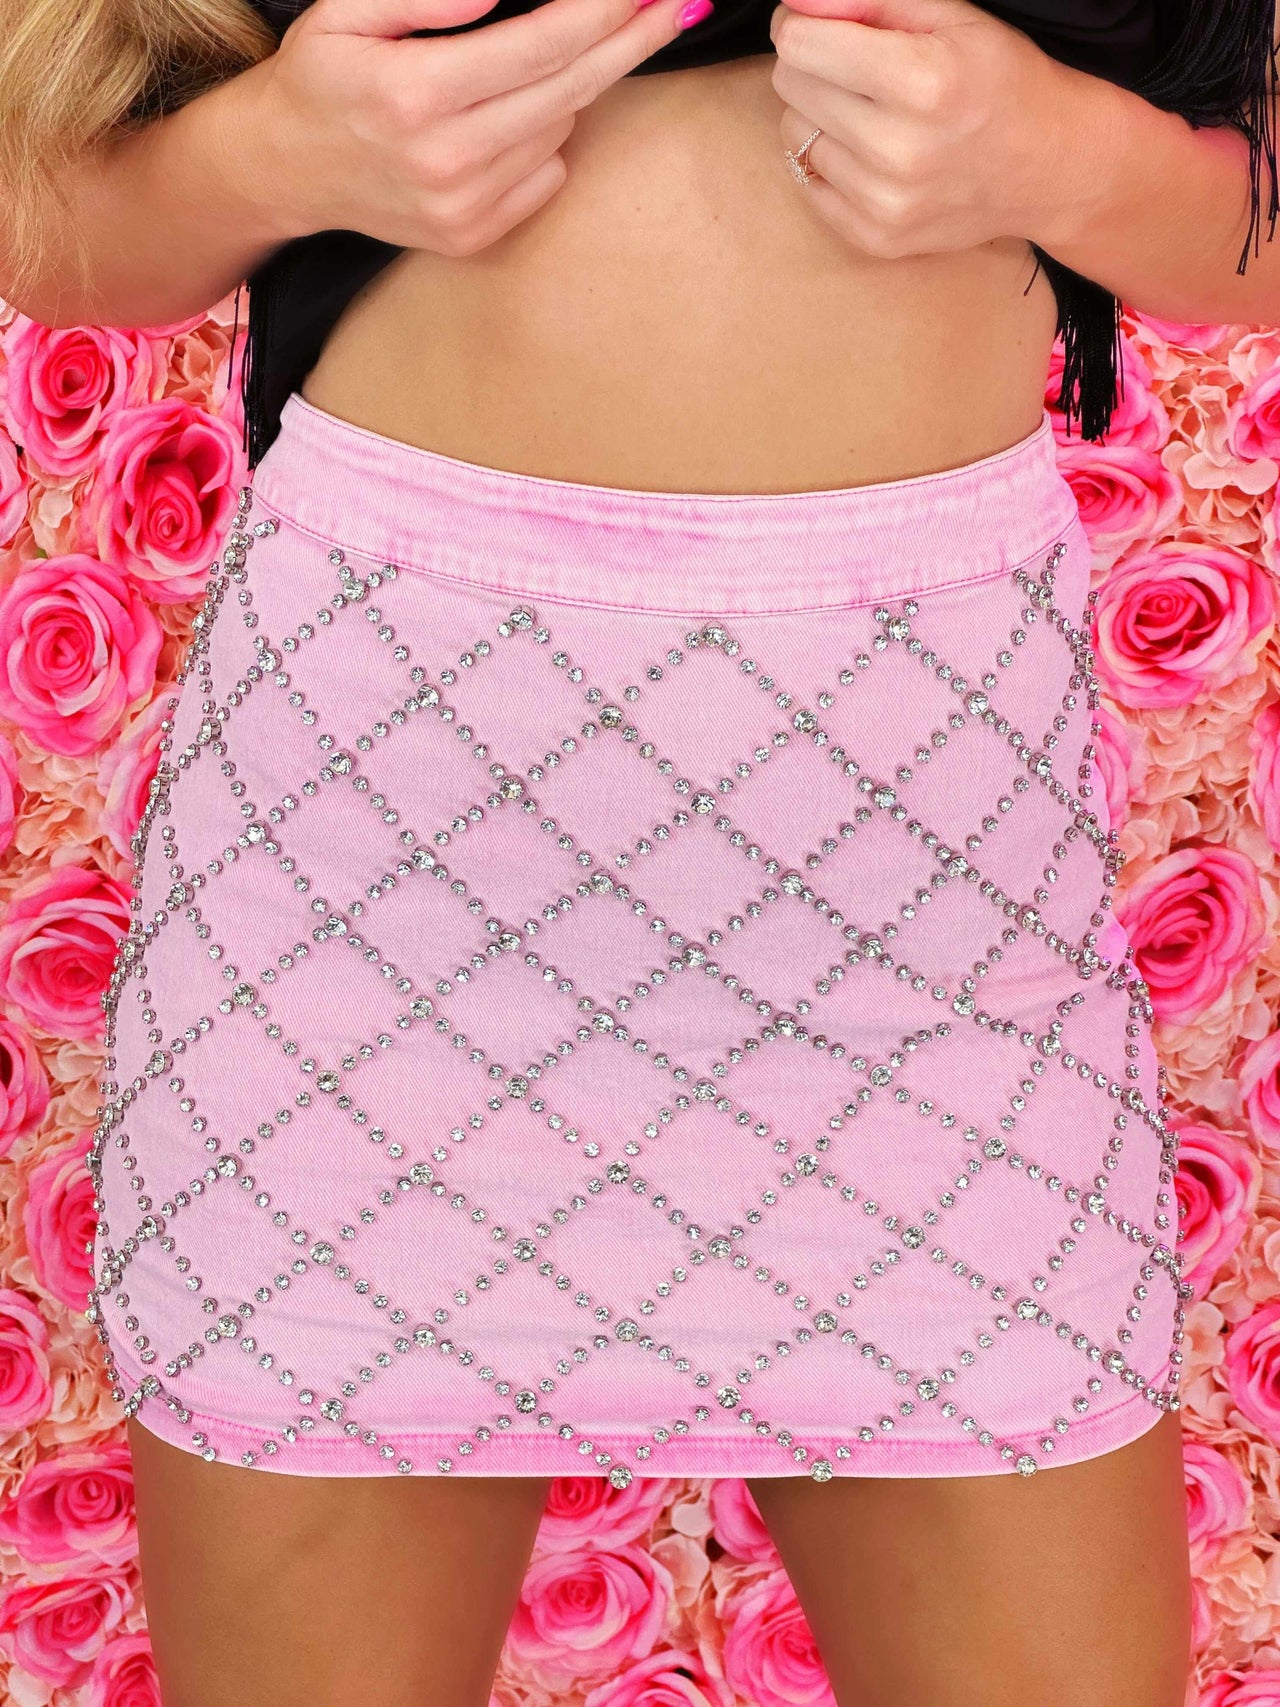 Pink denim skirt with rhinestone pattern.